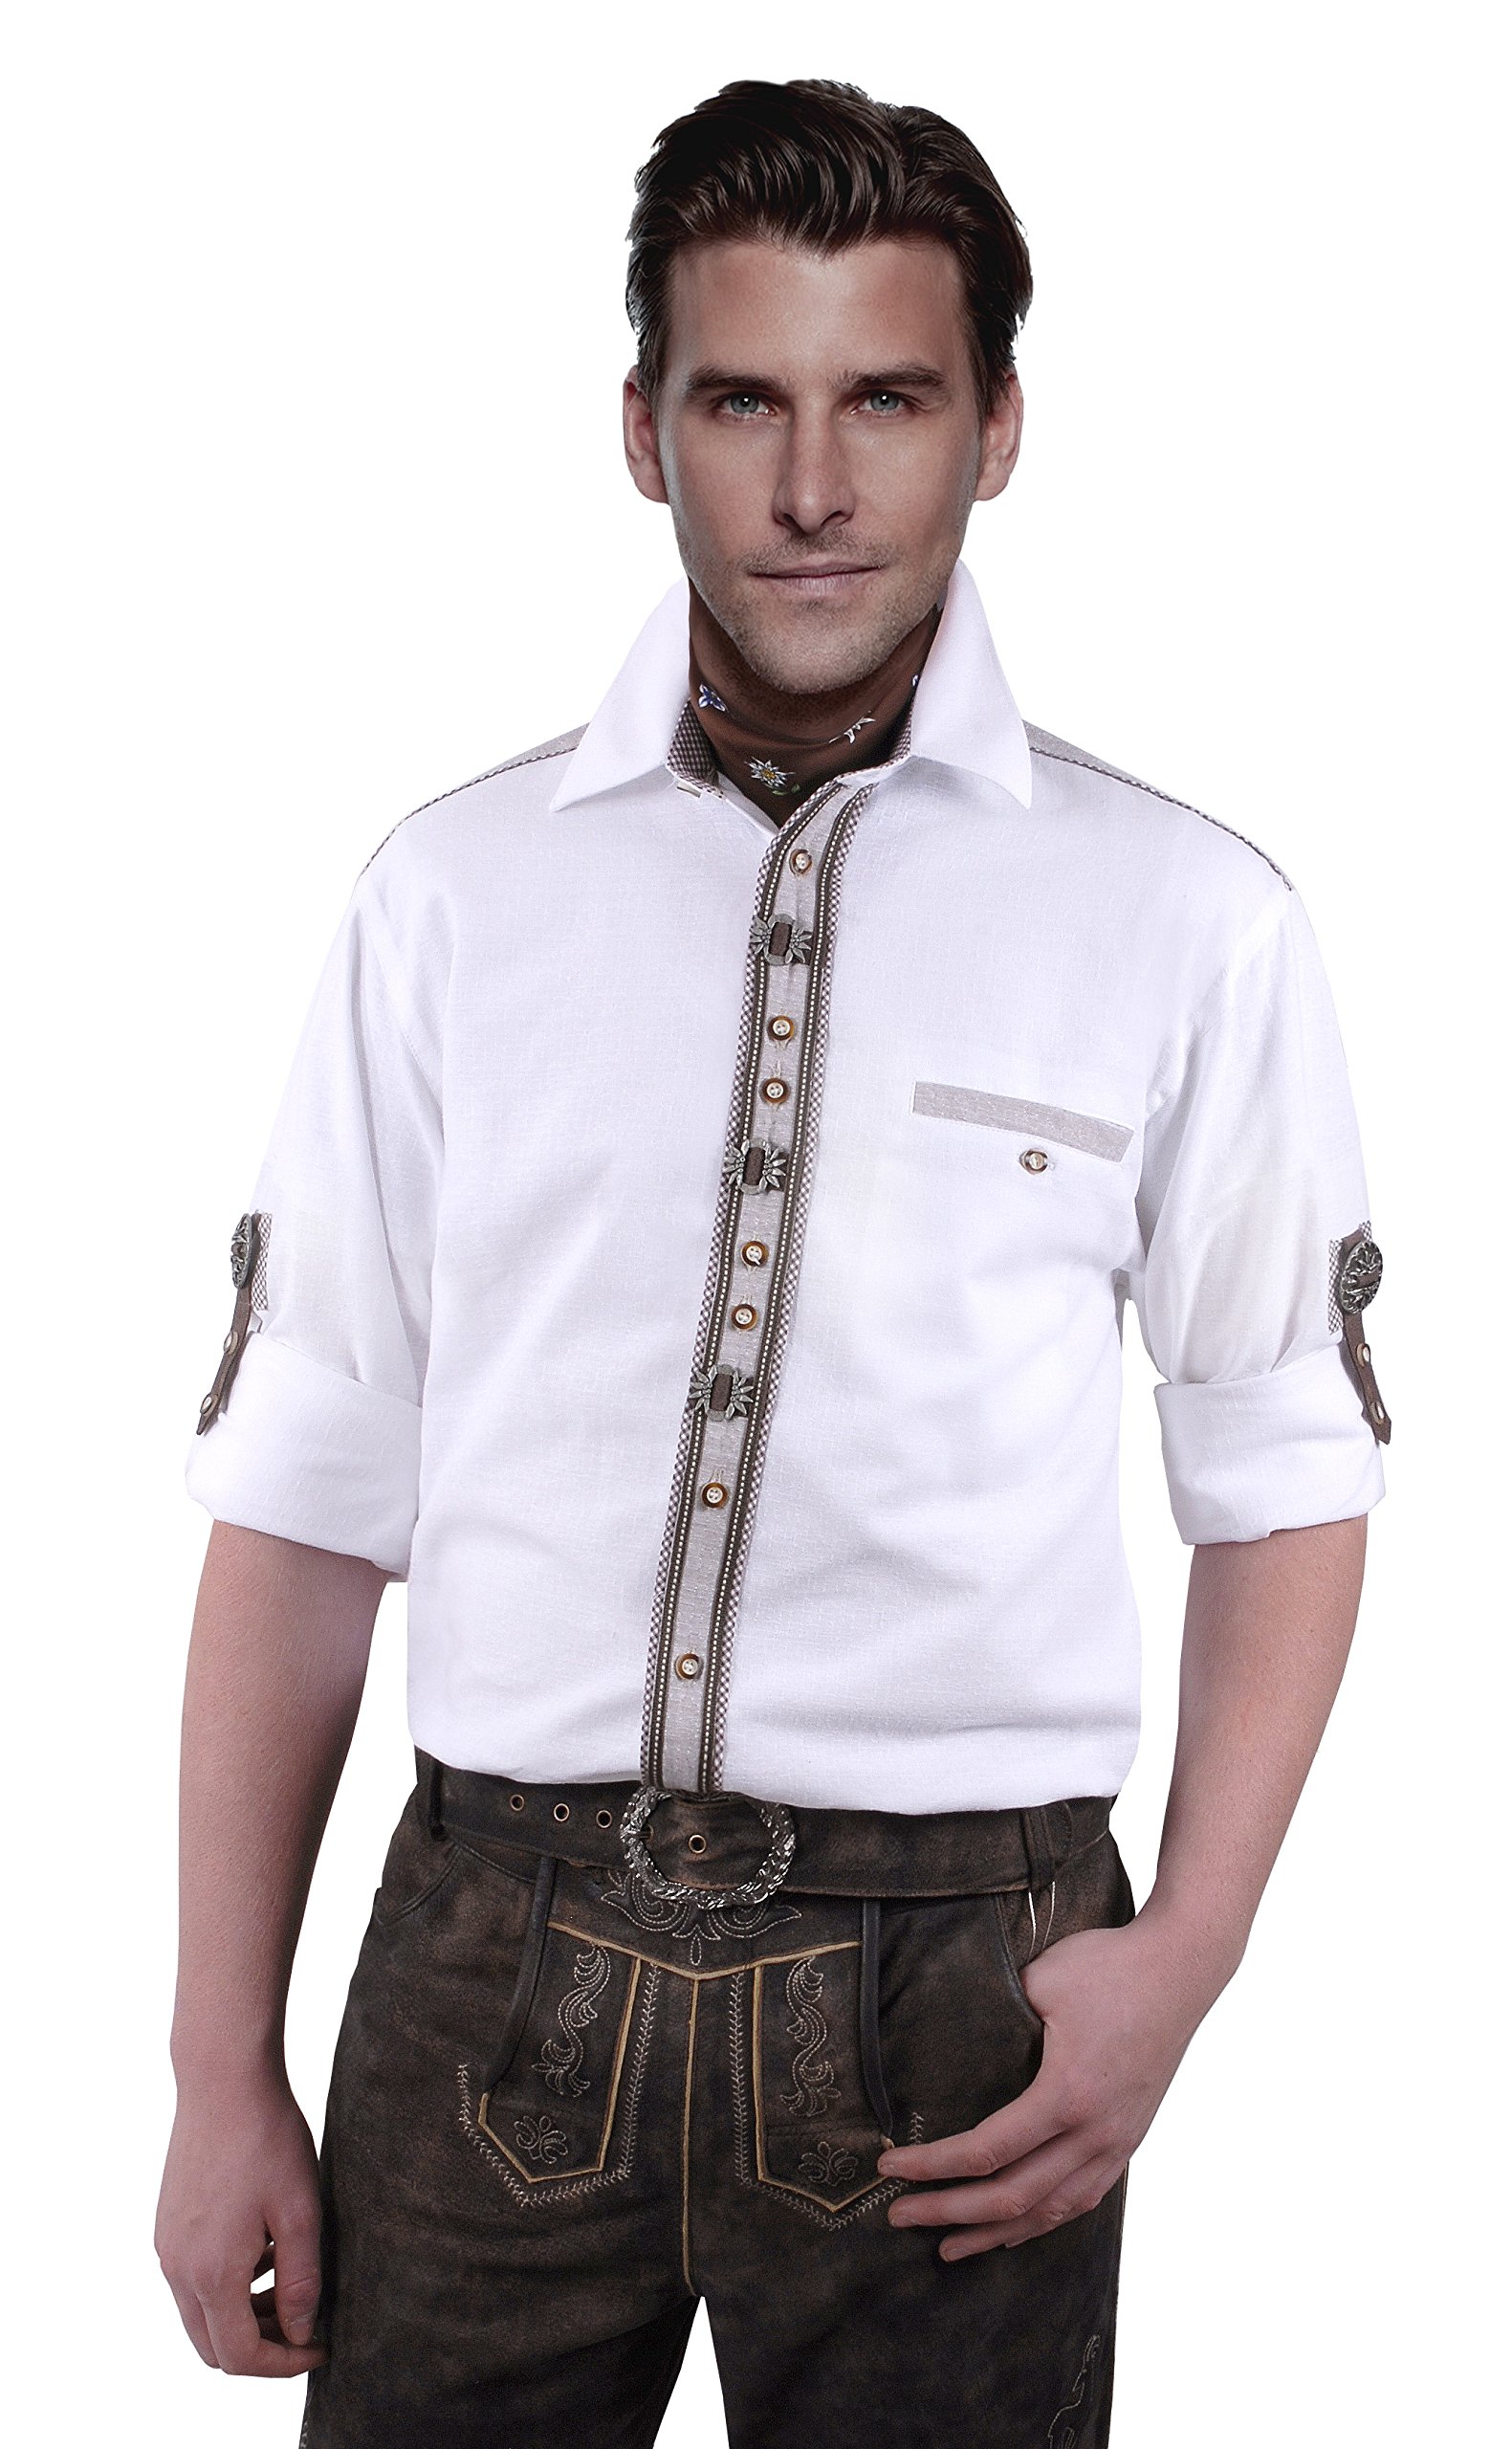 Moschen-Bayern Herren Hemd Trachtenhemd Langarm Kurzarm Wiesn Hemd Trachten Männer Oktoberfest Weiß